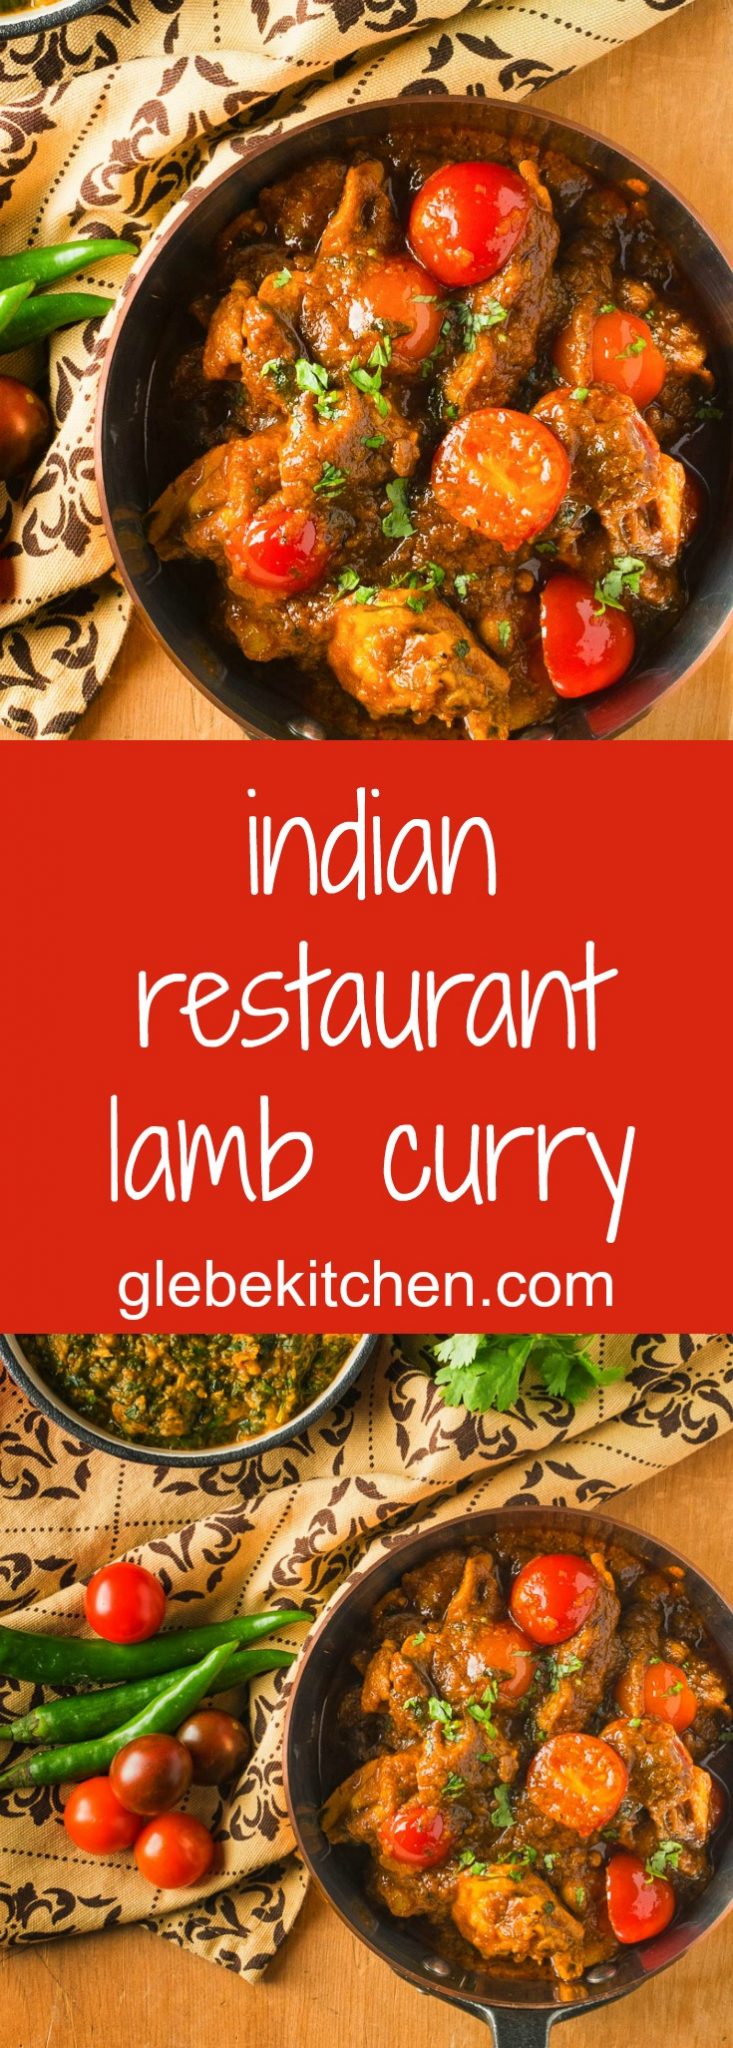 indian restaurant lamb curry - glebe kitchen